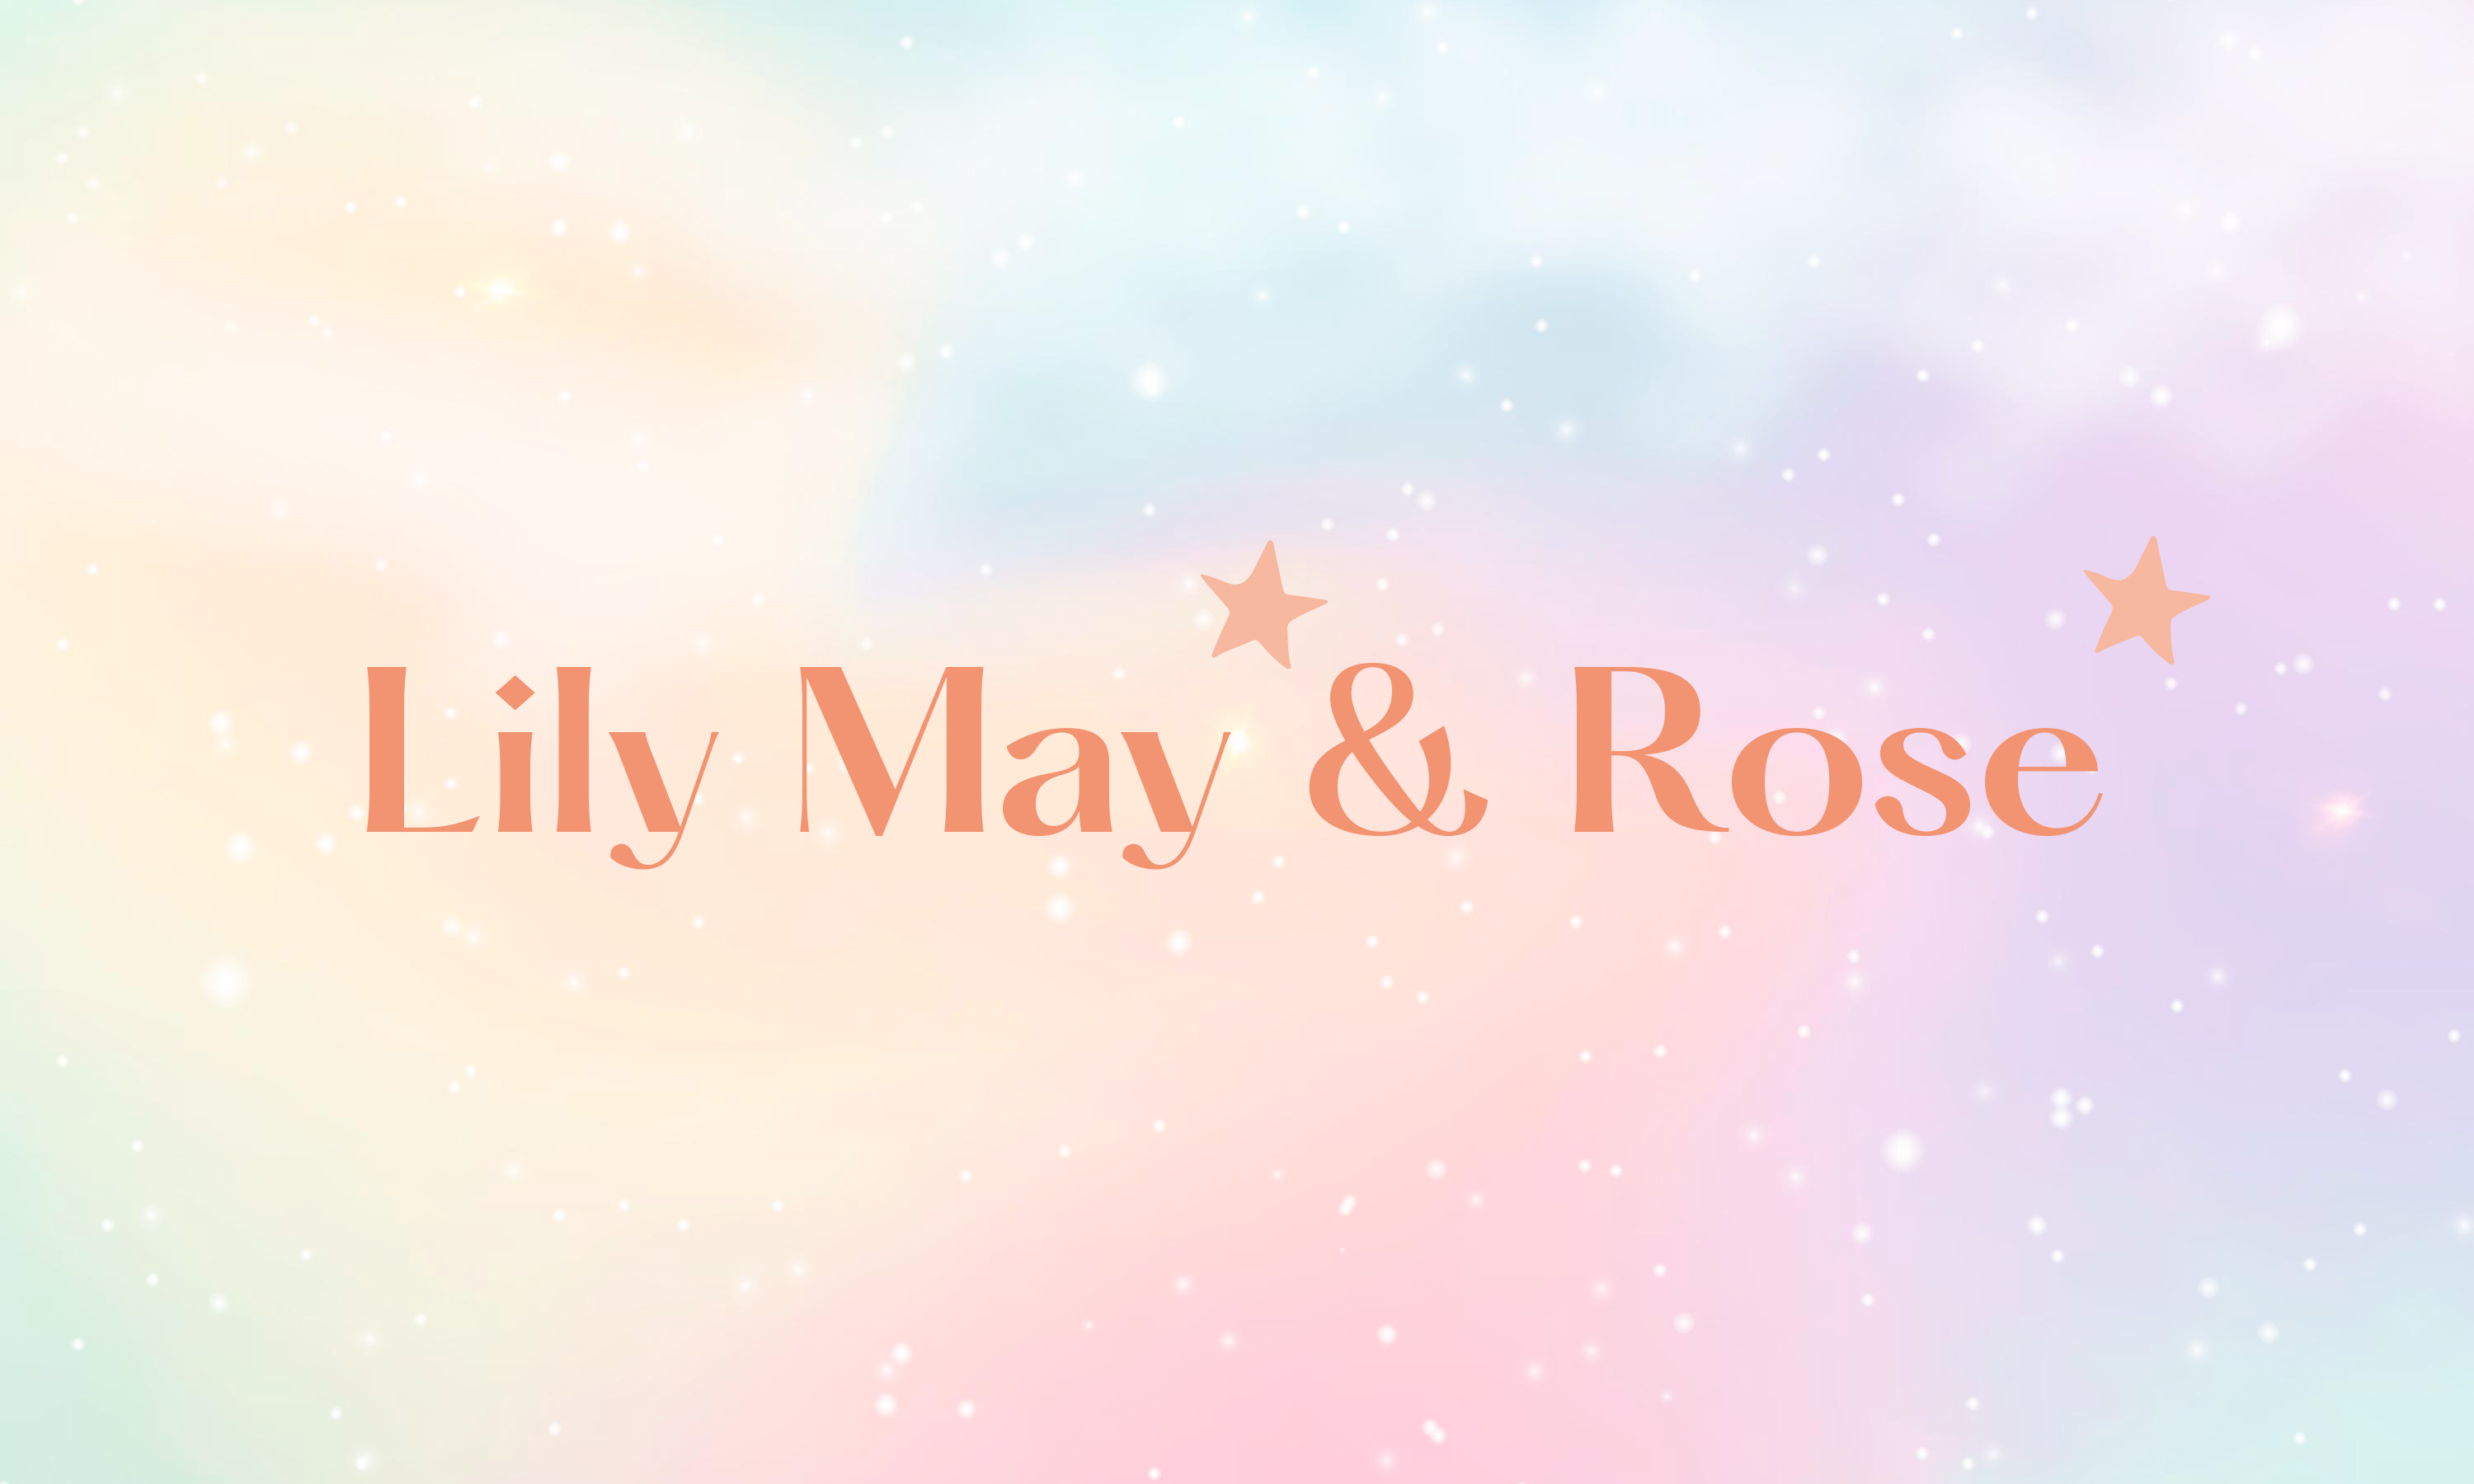 Lily May & Rose